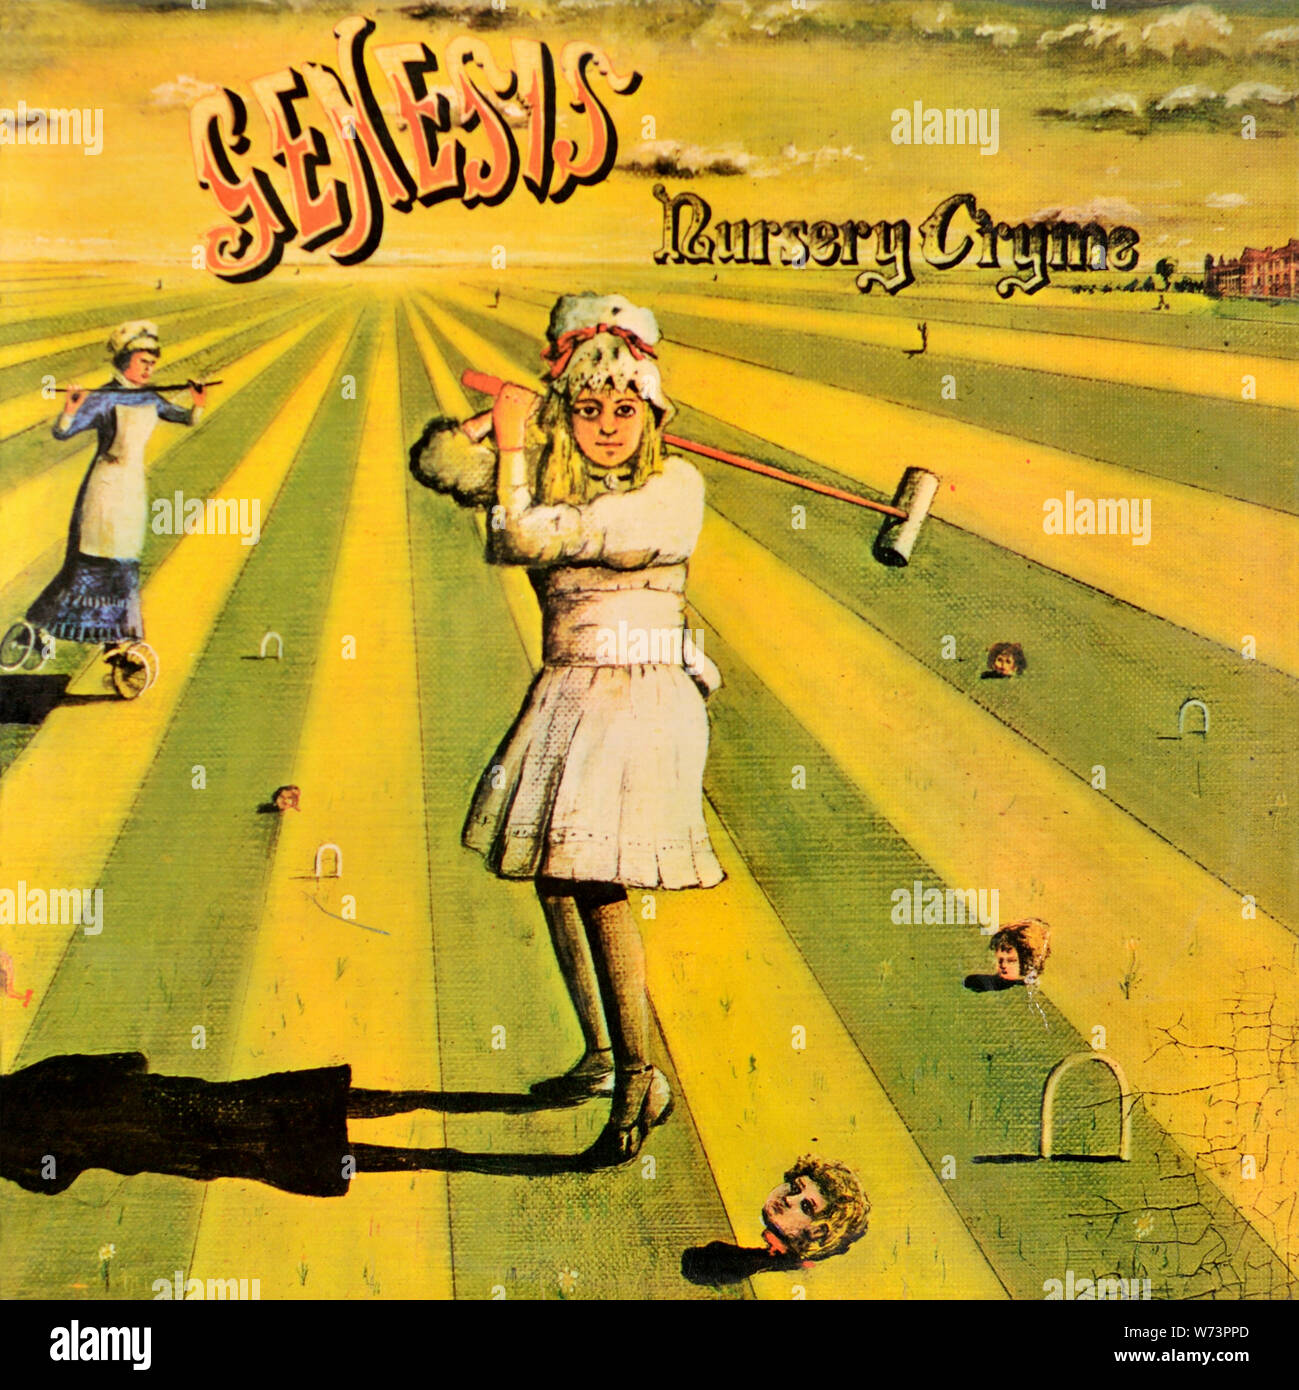 Genesis - copertina originale in vinile - Nursery Cryme - 1971 Foto Stock